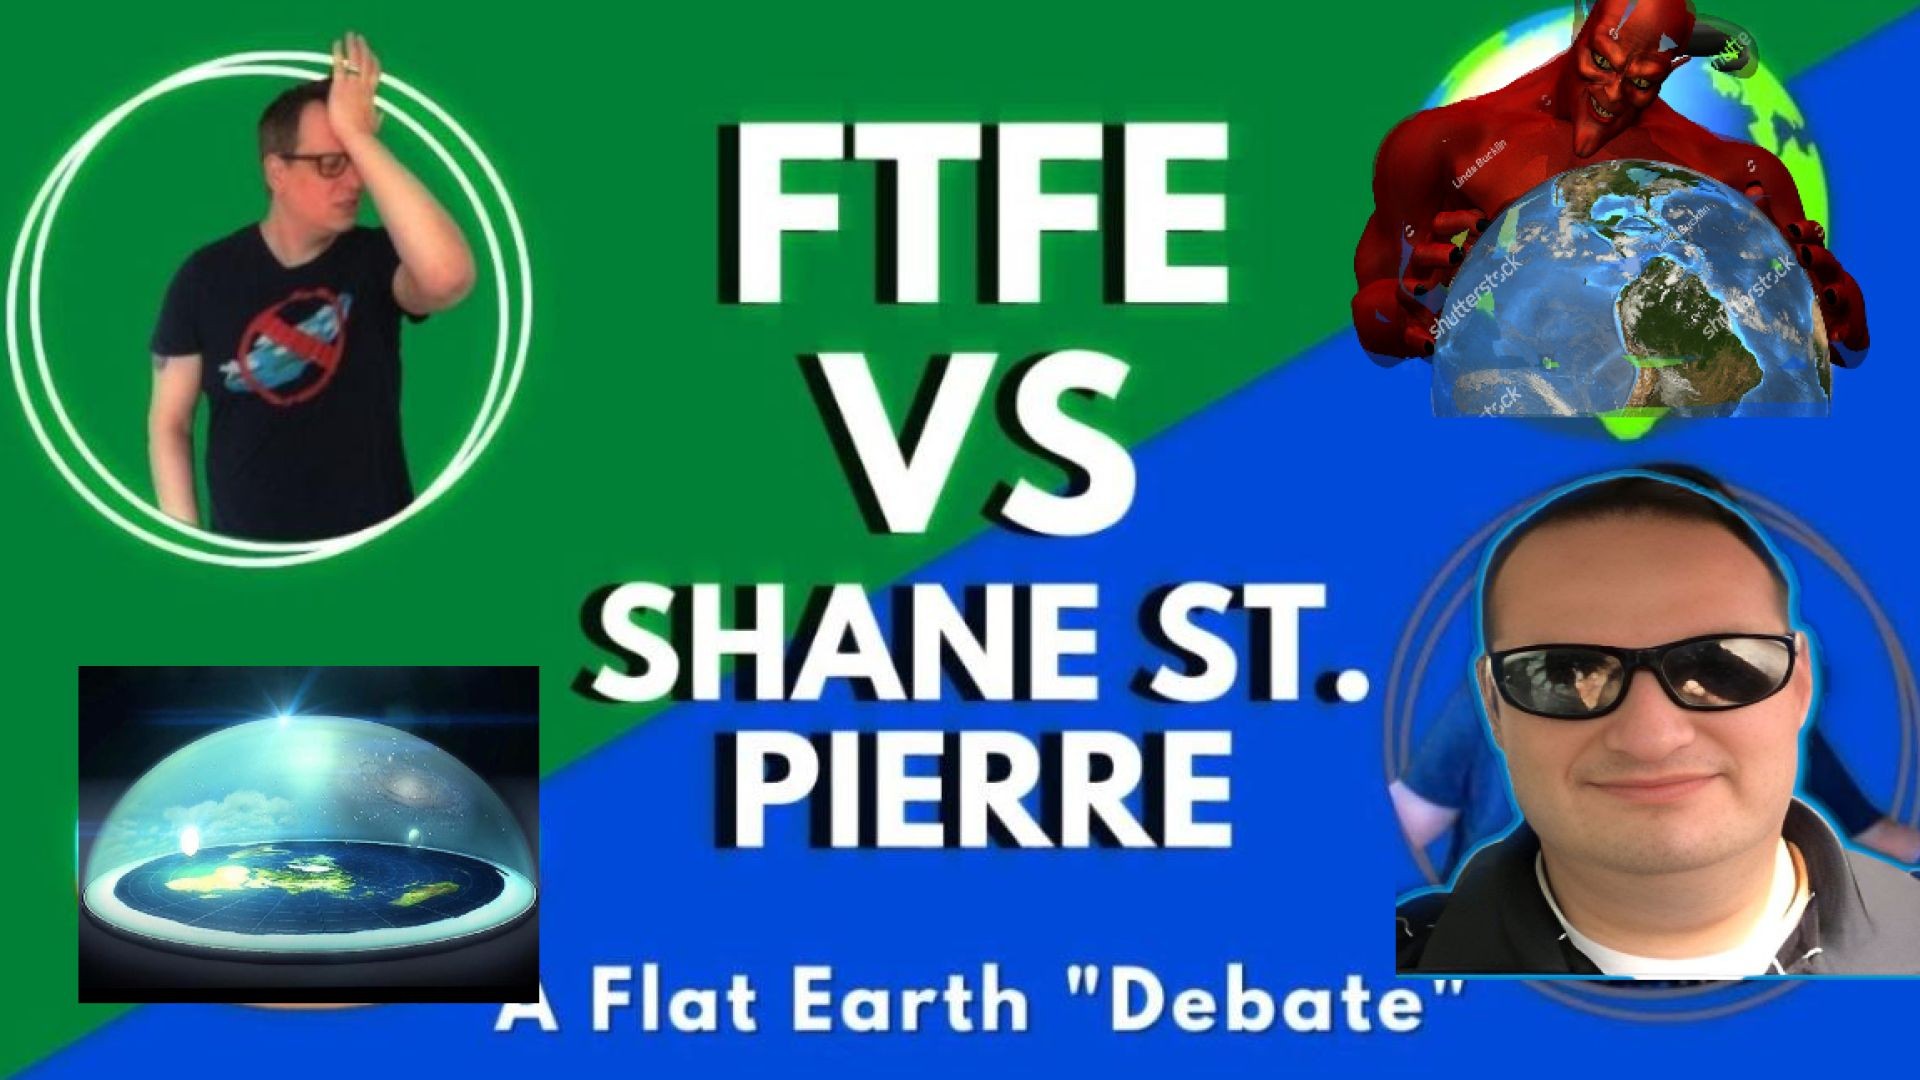 A Flat Earth "Debate" - FTFE VS Shane ST Pierre Round 2